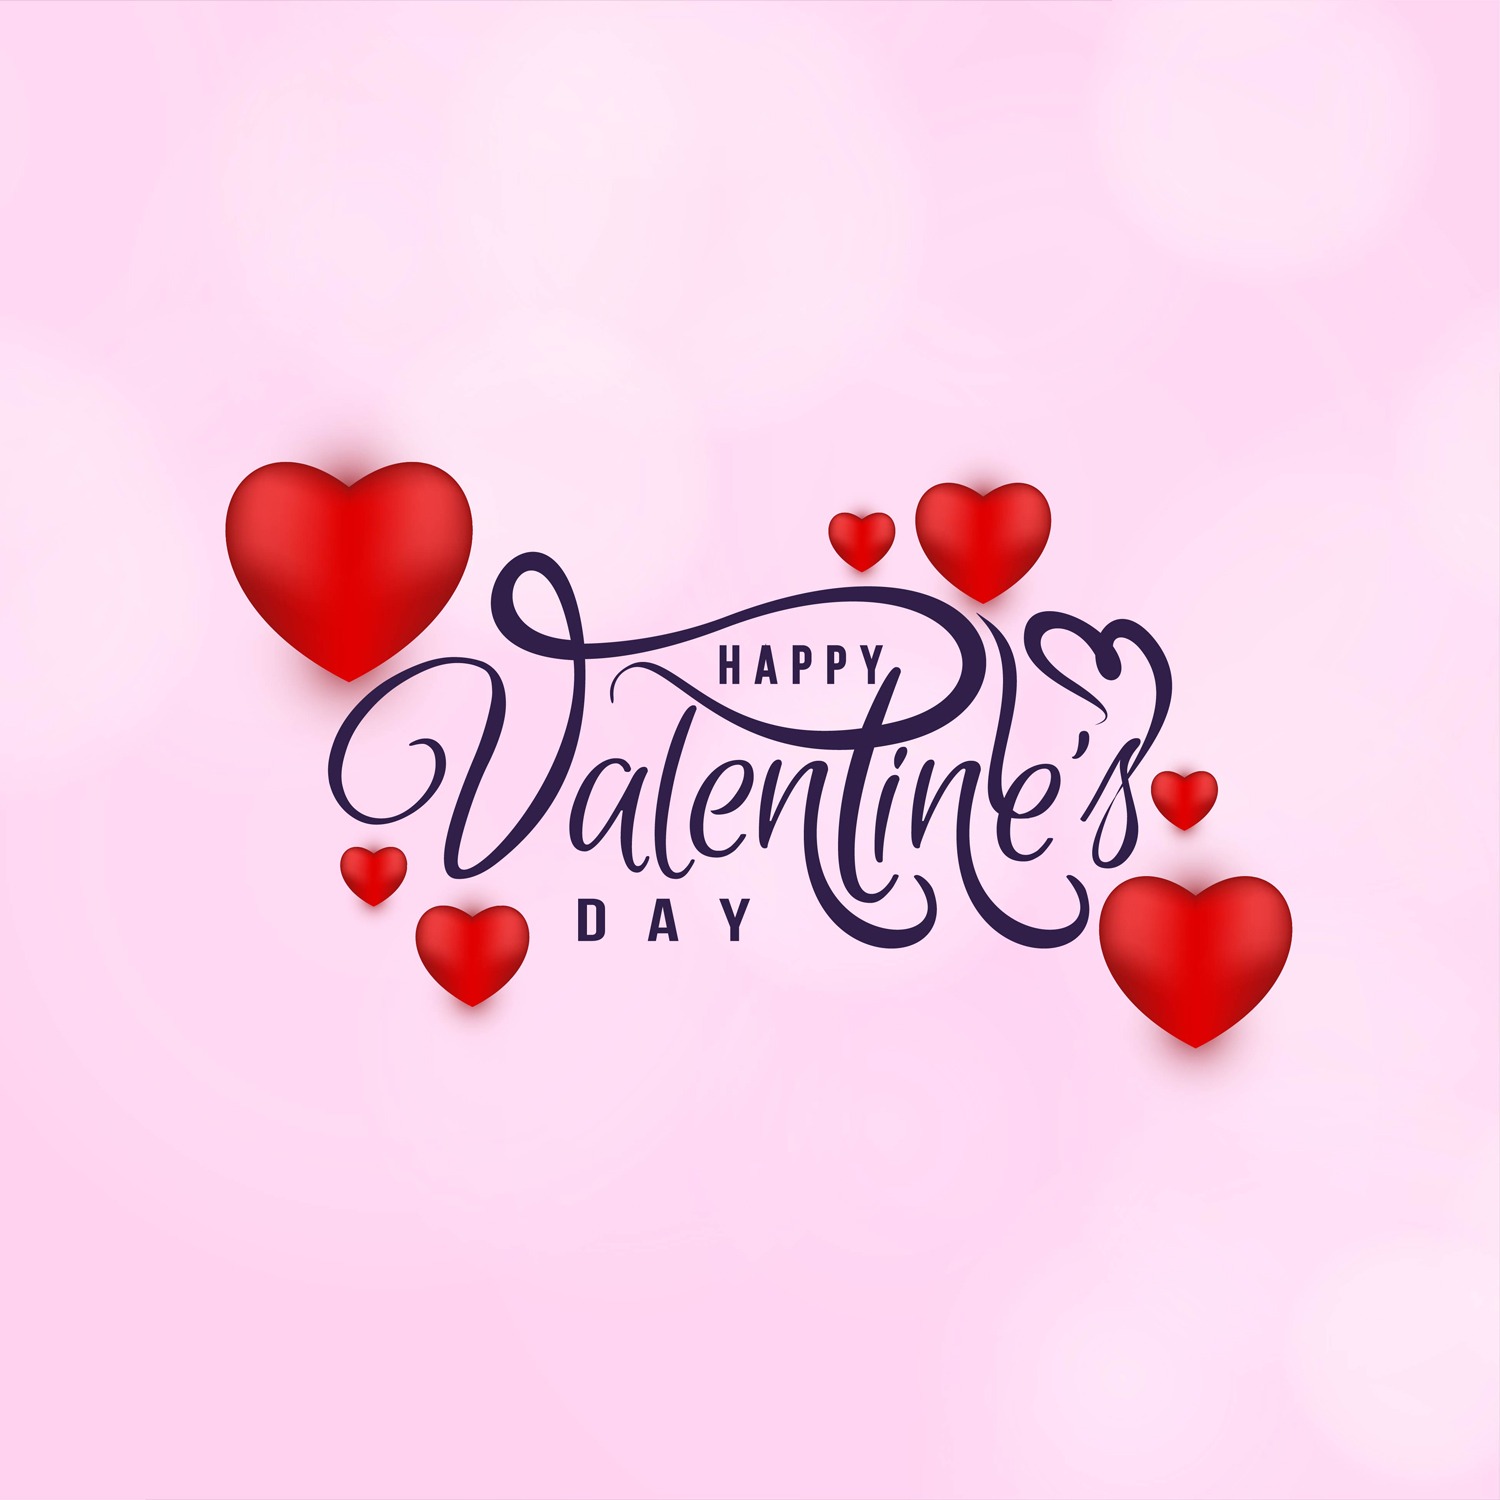 Romantic Valentine Card ideas